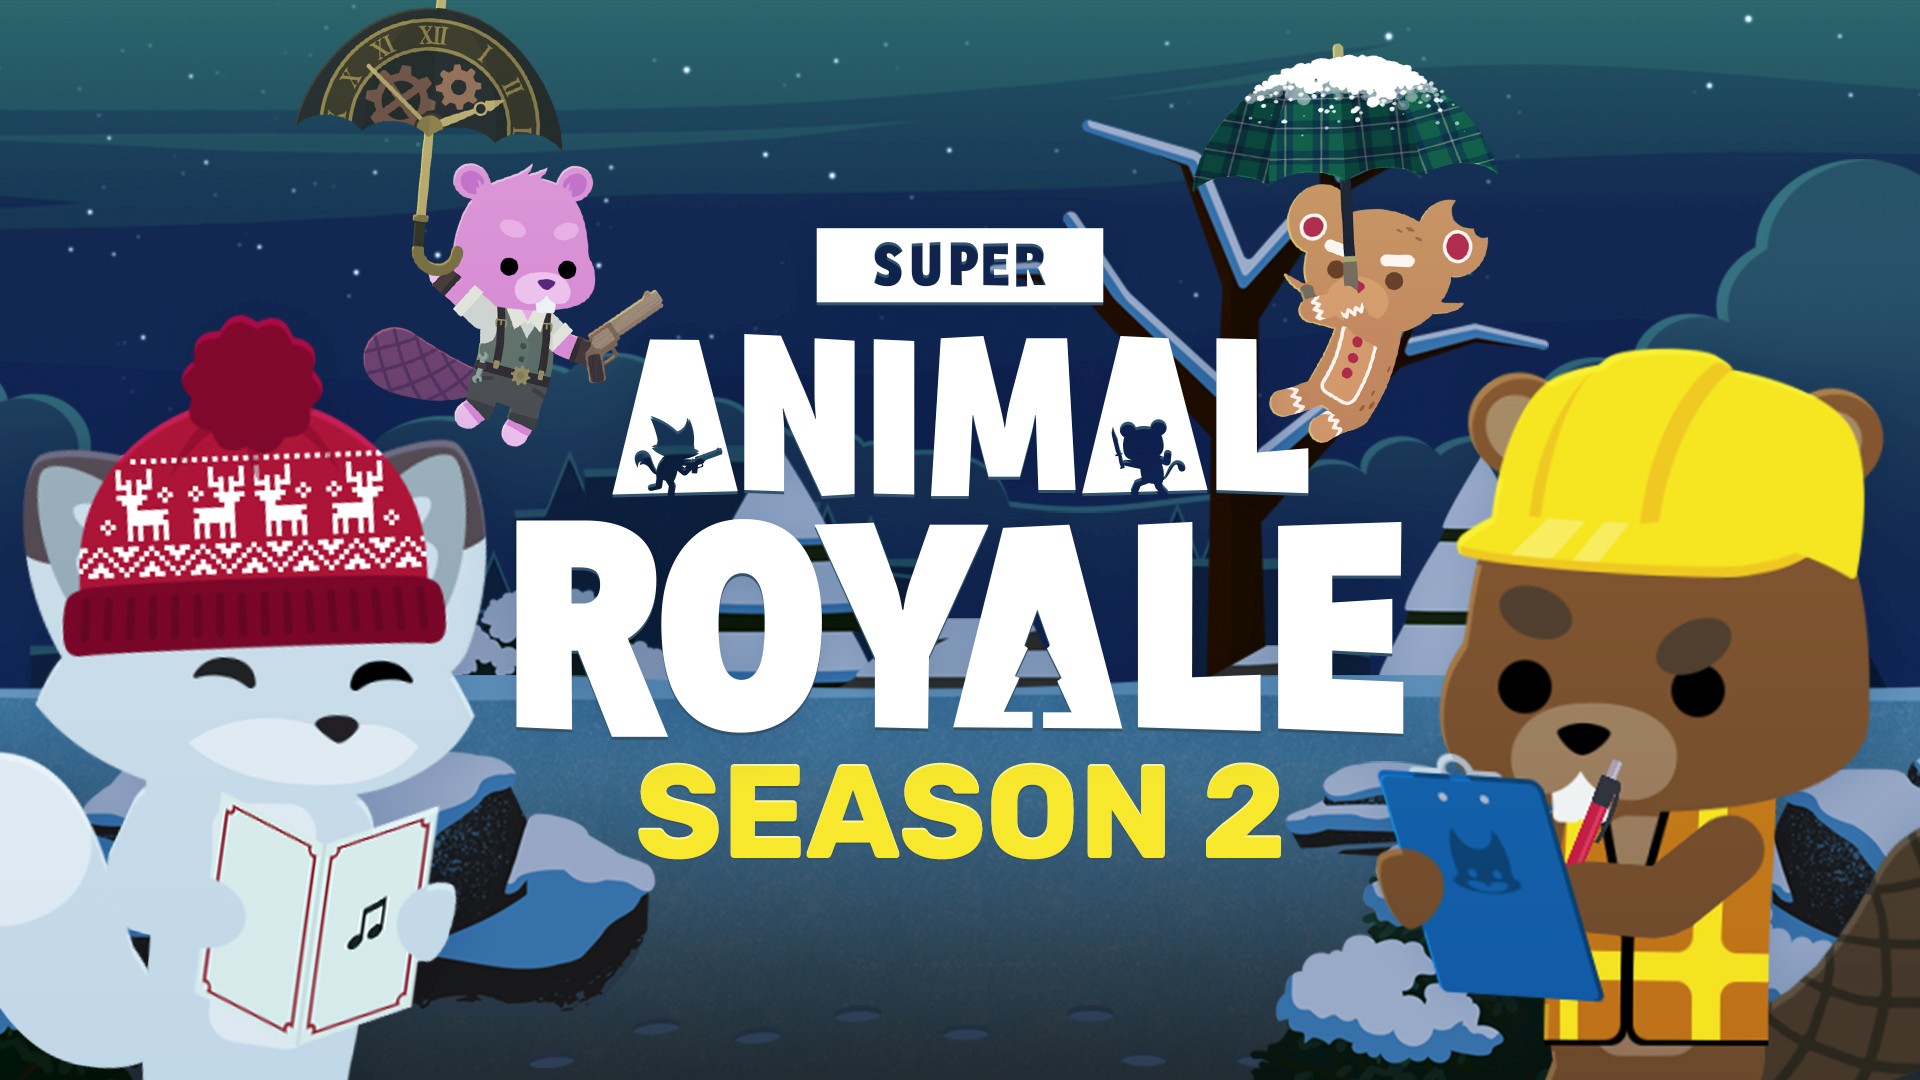 Season 2 of Super Animal Royale